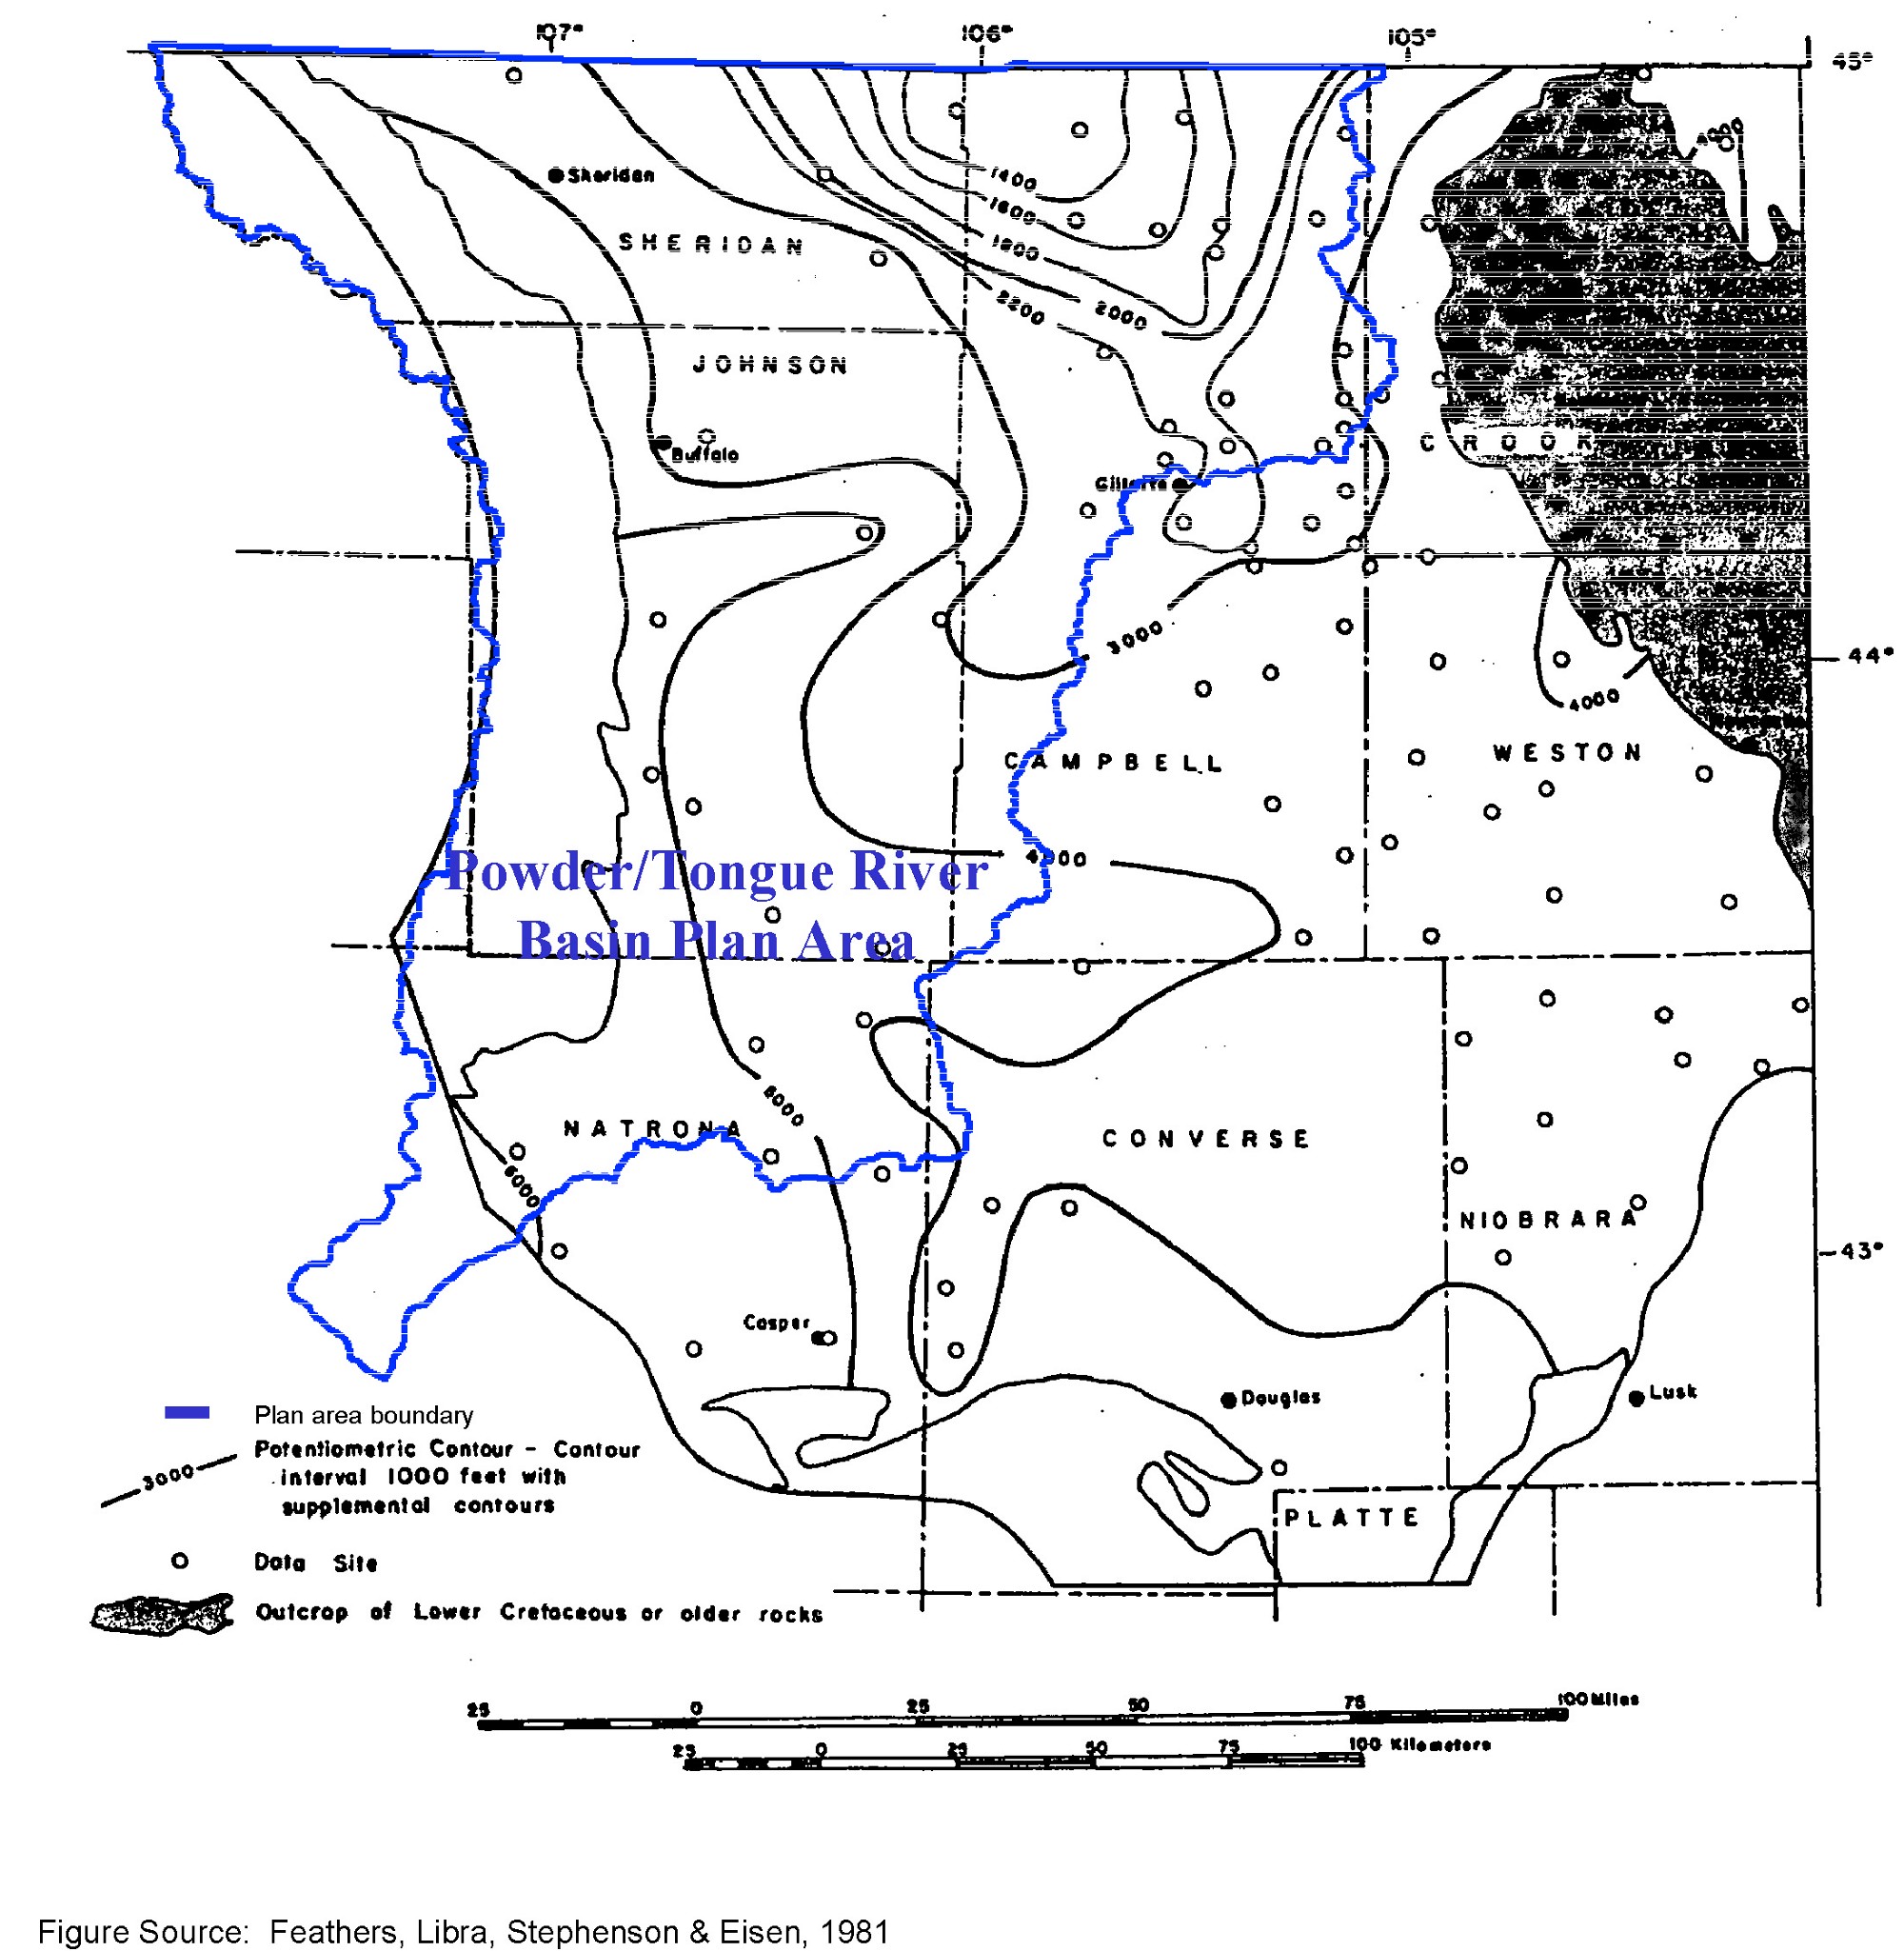 Potentiometric Surface in the Dakota Aquifer
(Lobmeyer, 1980